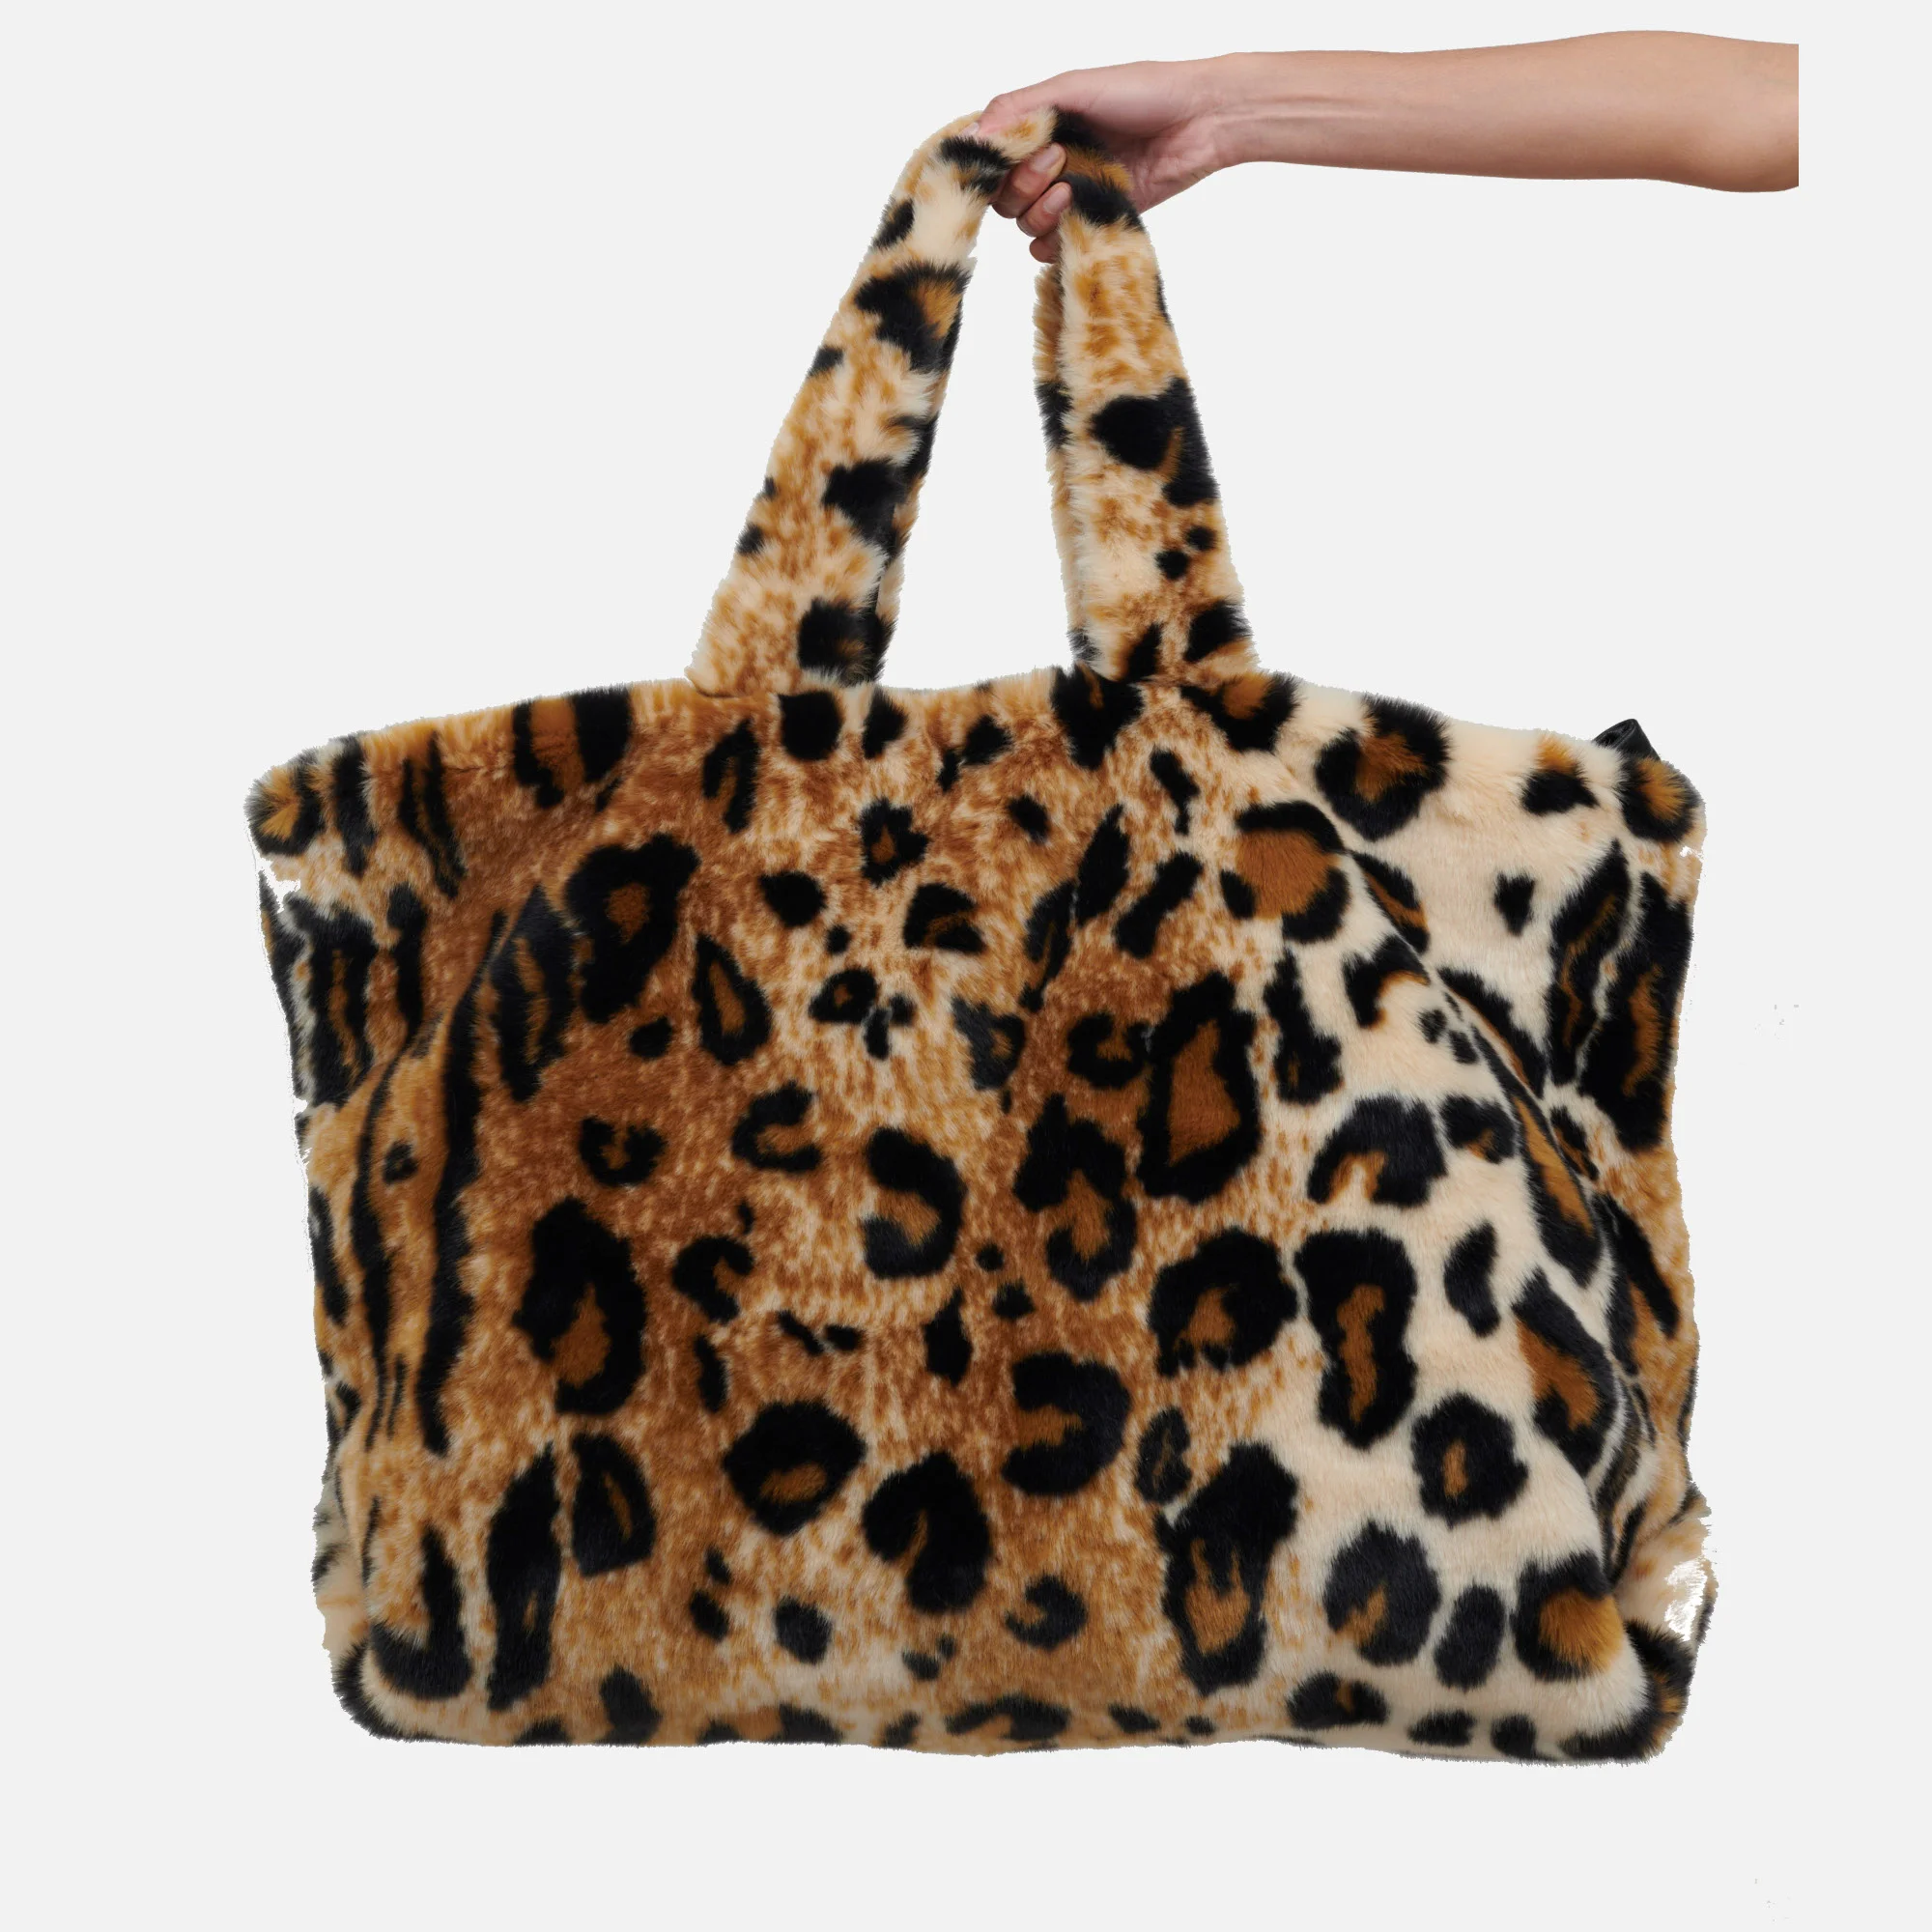 Jakke Tate Oversized Leopard Print Faux Fur-Blend Bag Image 1